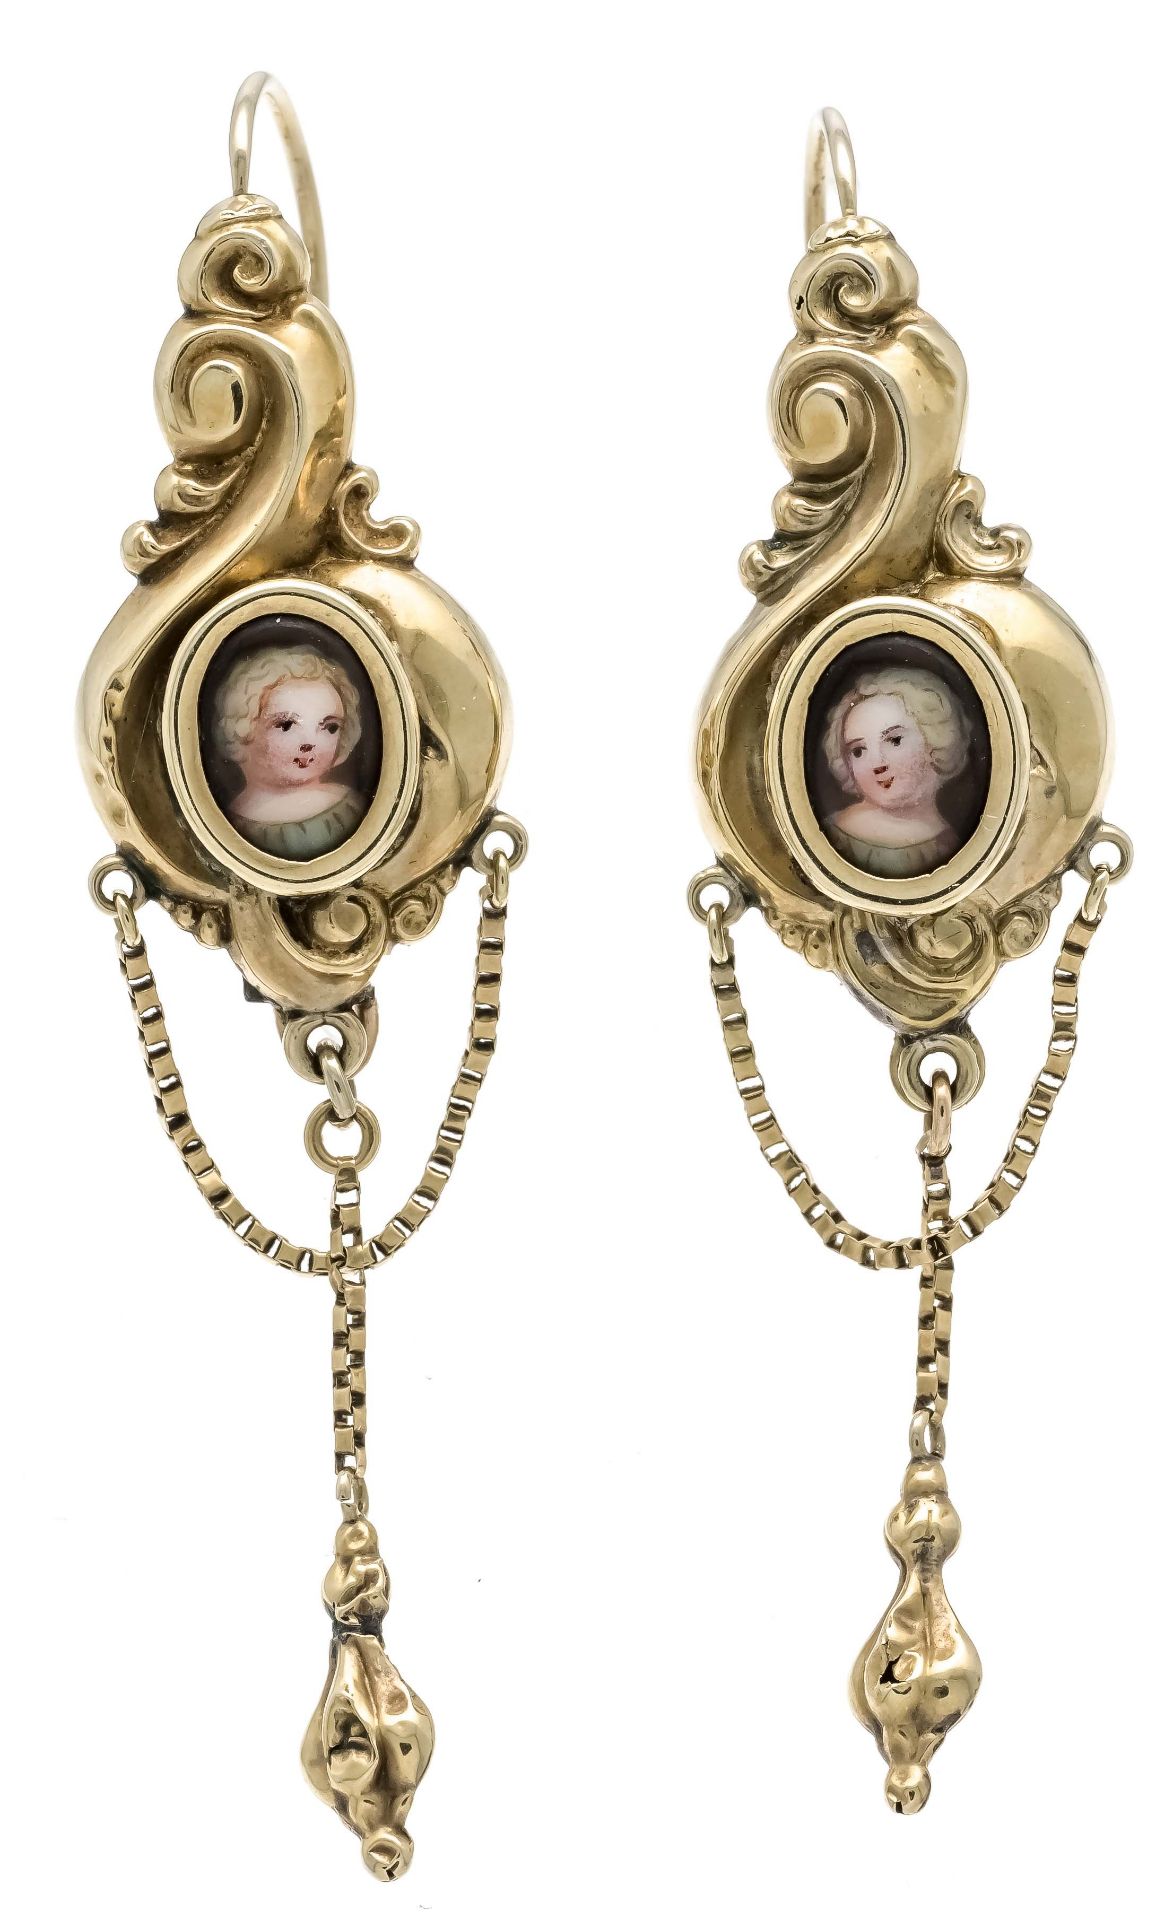 Biedermeier foam gold earrings GG 585/000 unmarked, tested, with 2 oval miniatures 7 x 5.5 mm of